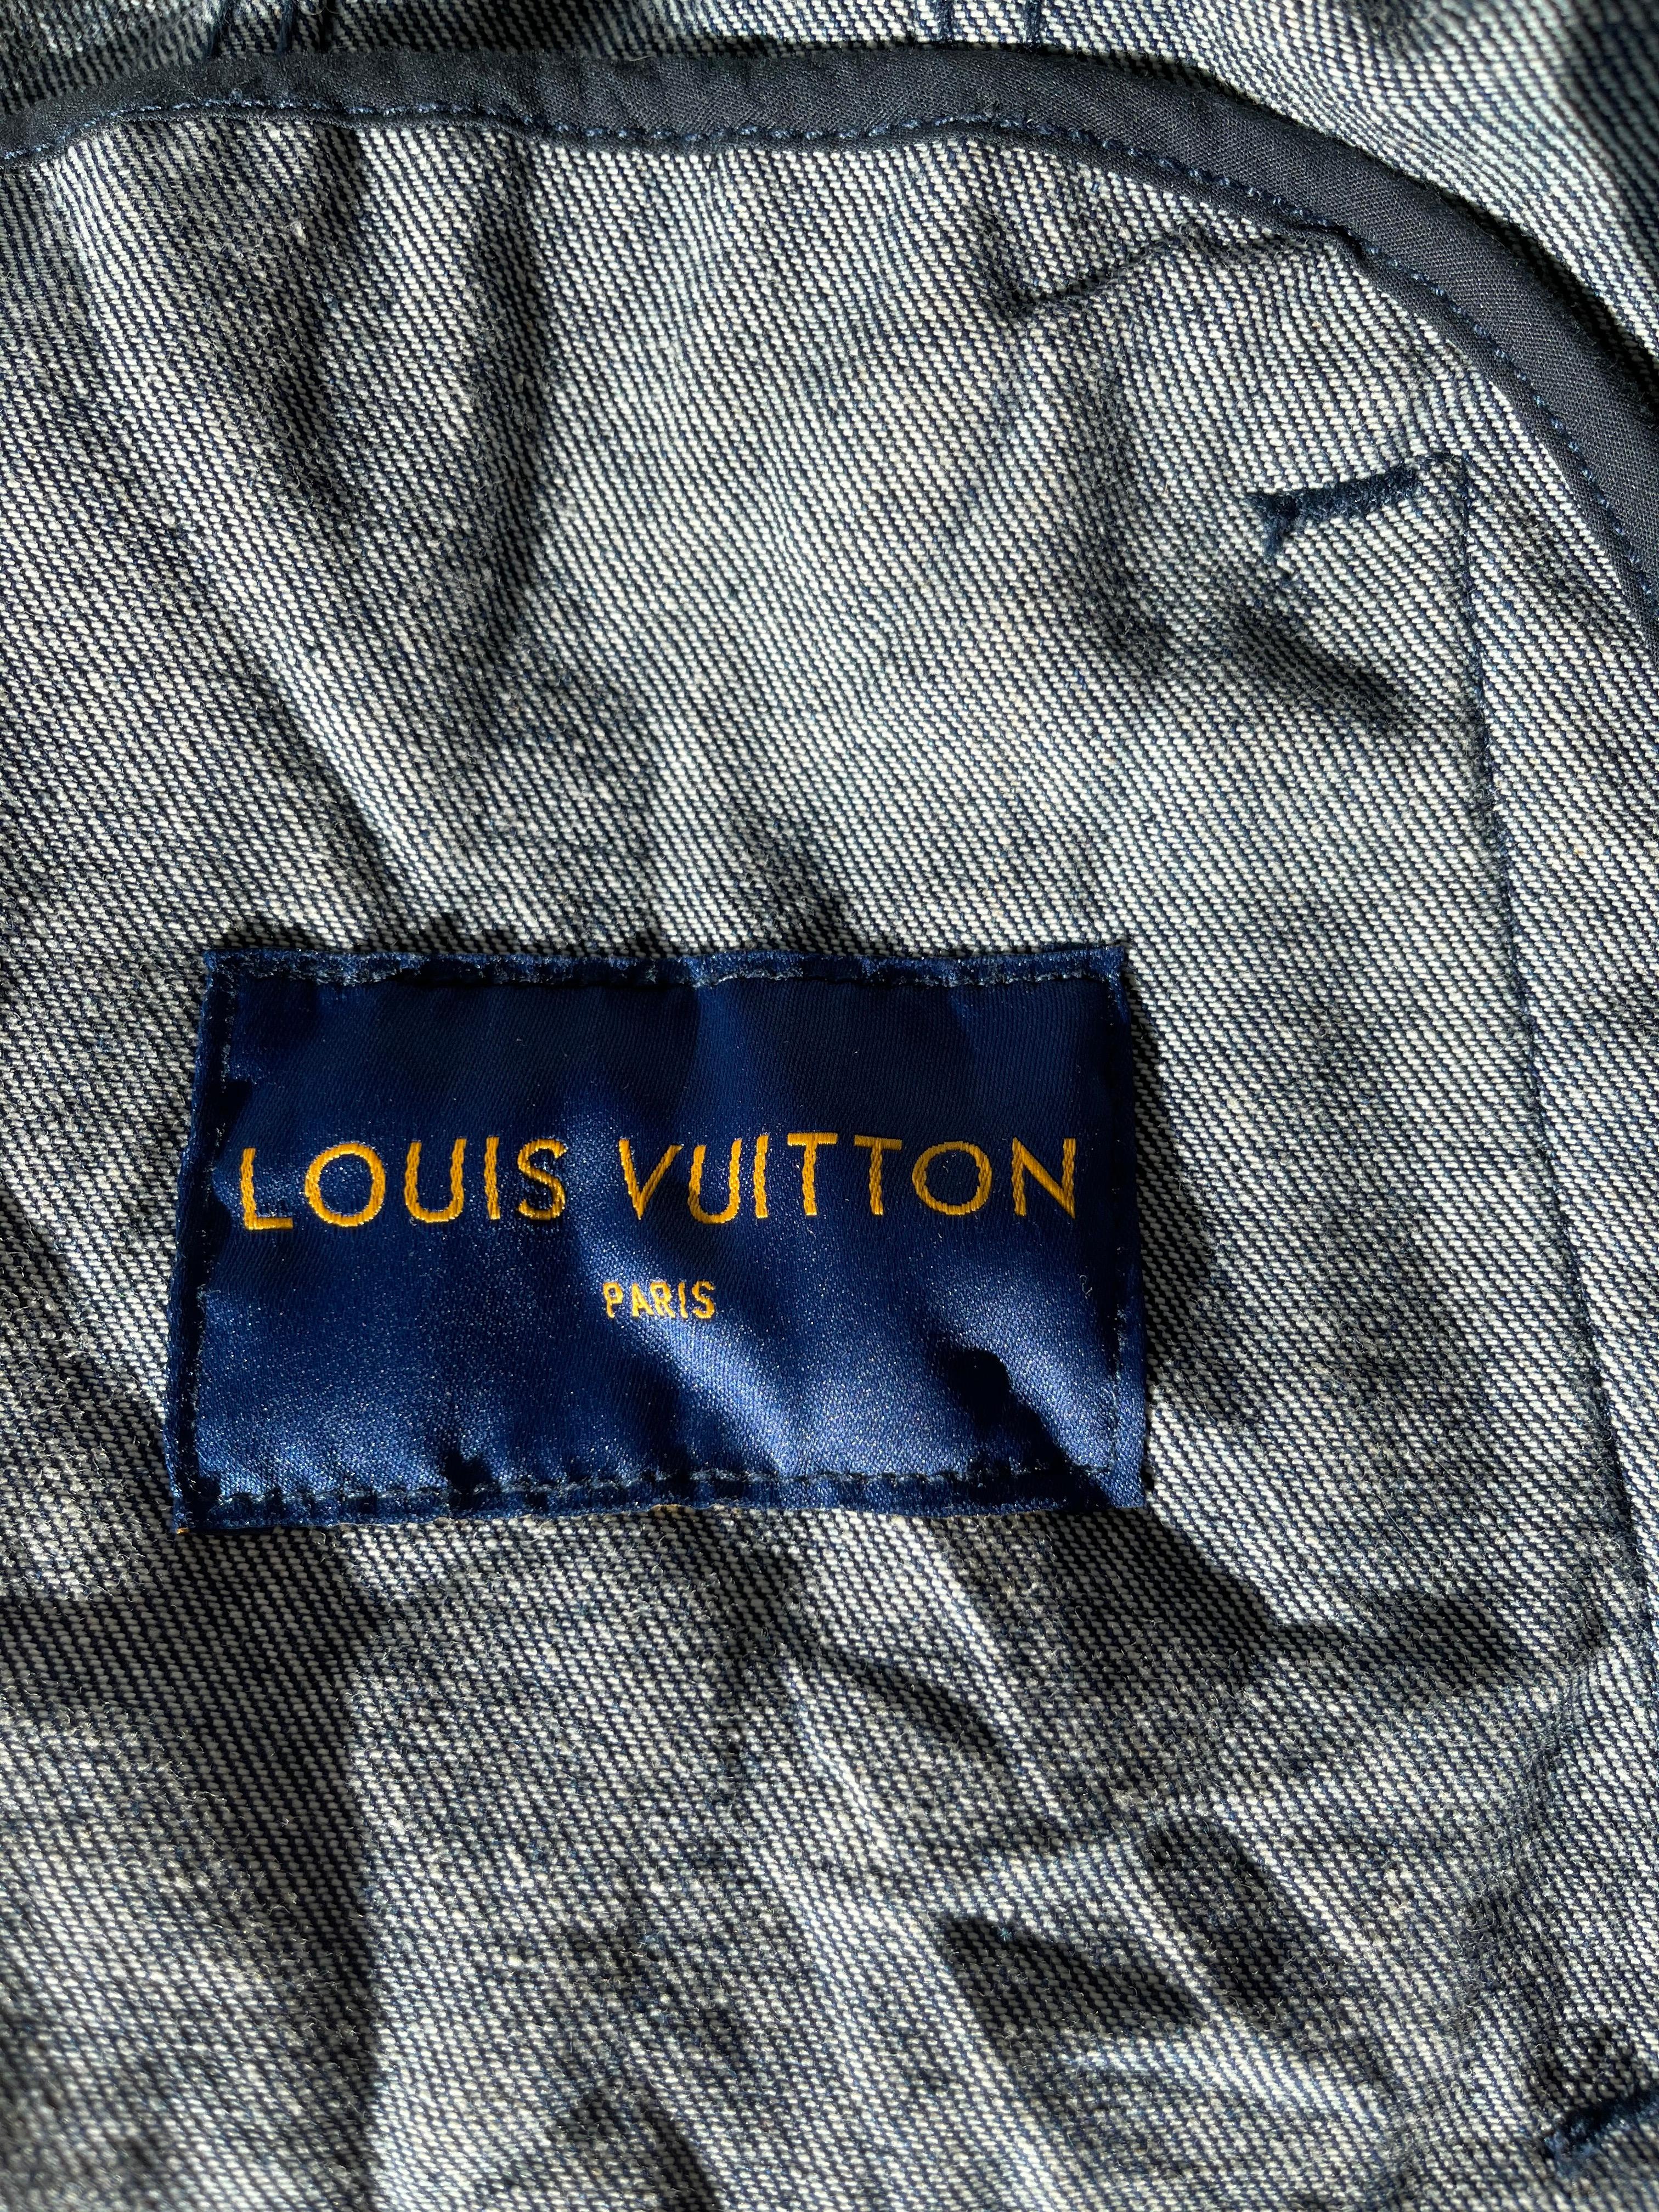 Louis Vuitton Kim Jones Monogram Denim Jacket (Large) In Excellent Condition In Montreal, Quebec